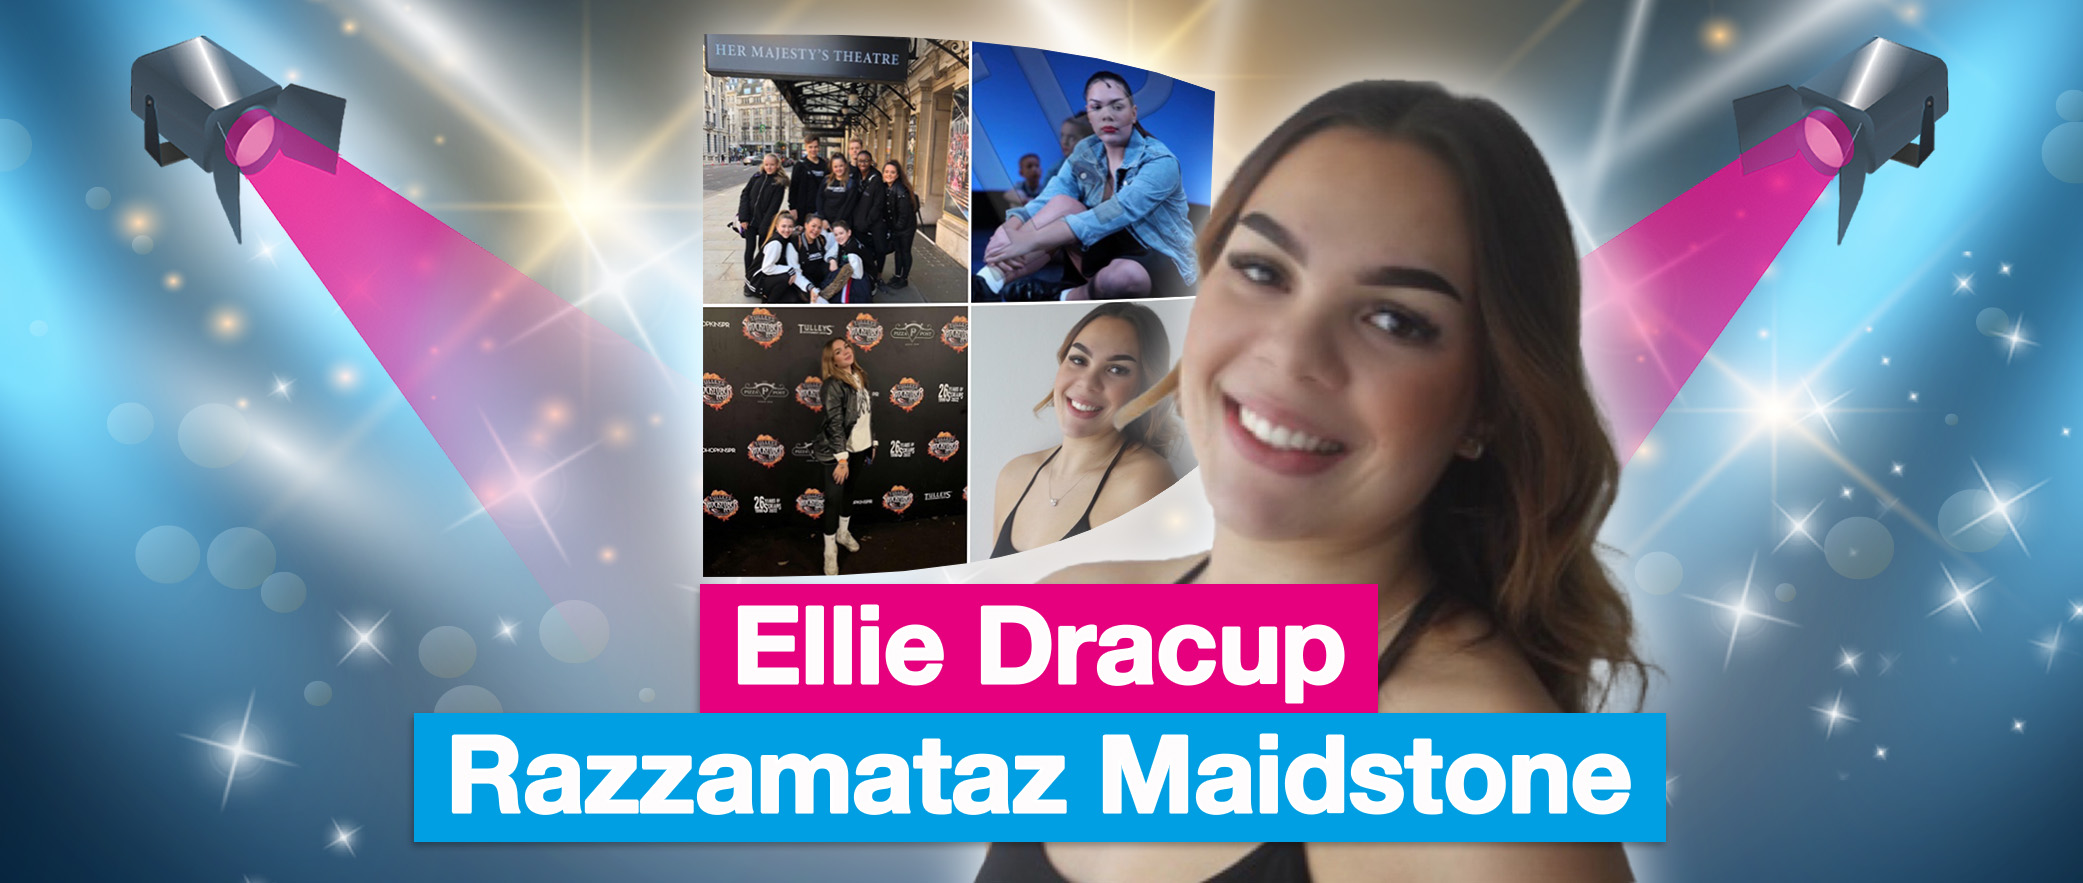 Ellie Dracup Razzamataz Maidstone